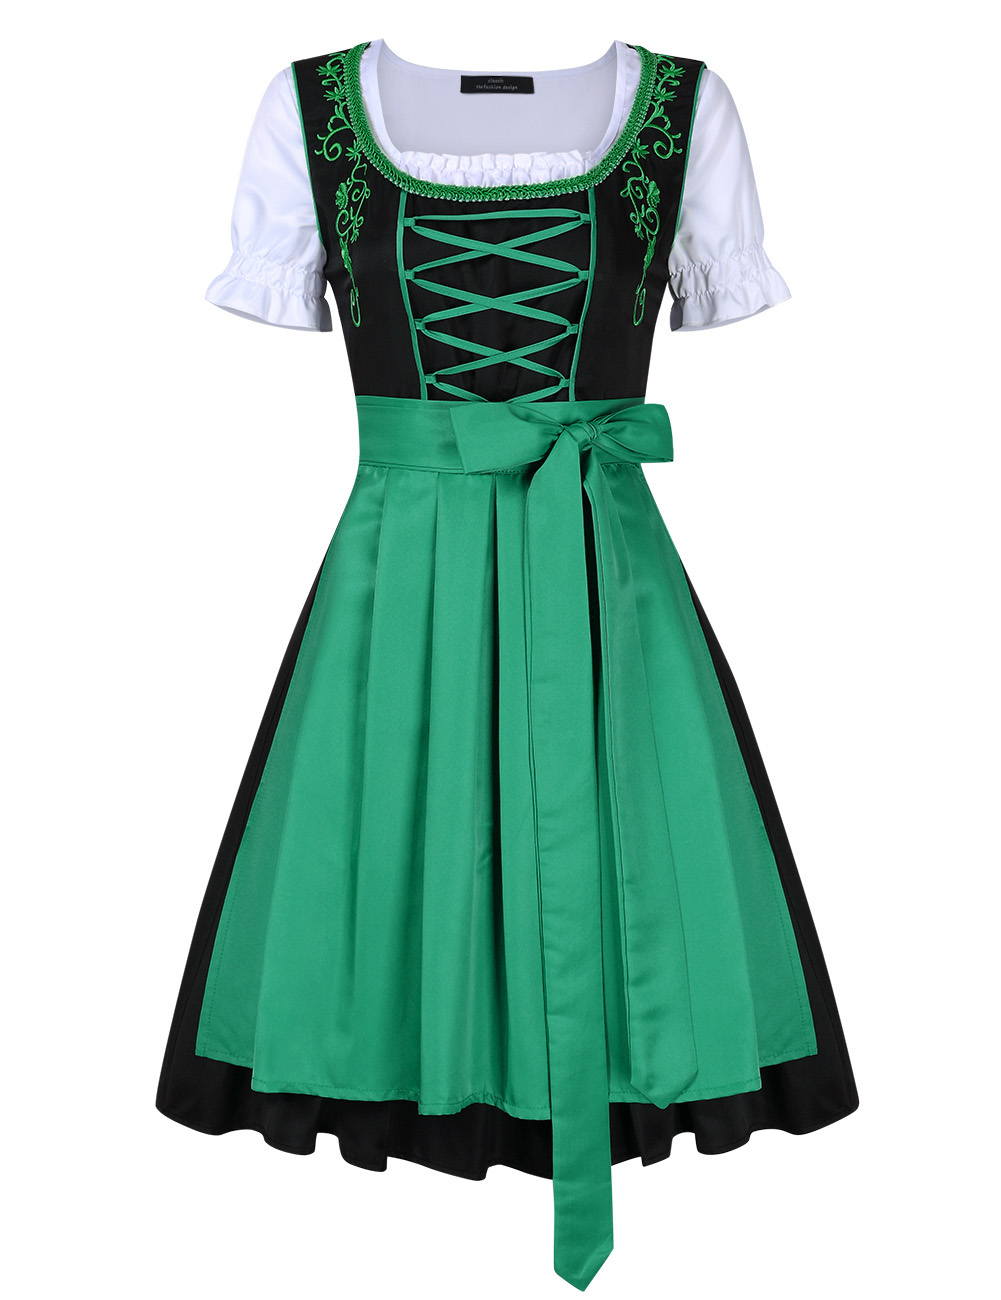 Women Classic Dress Three Pieces Suit for Germen Traditional Oktoberfest Costume